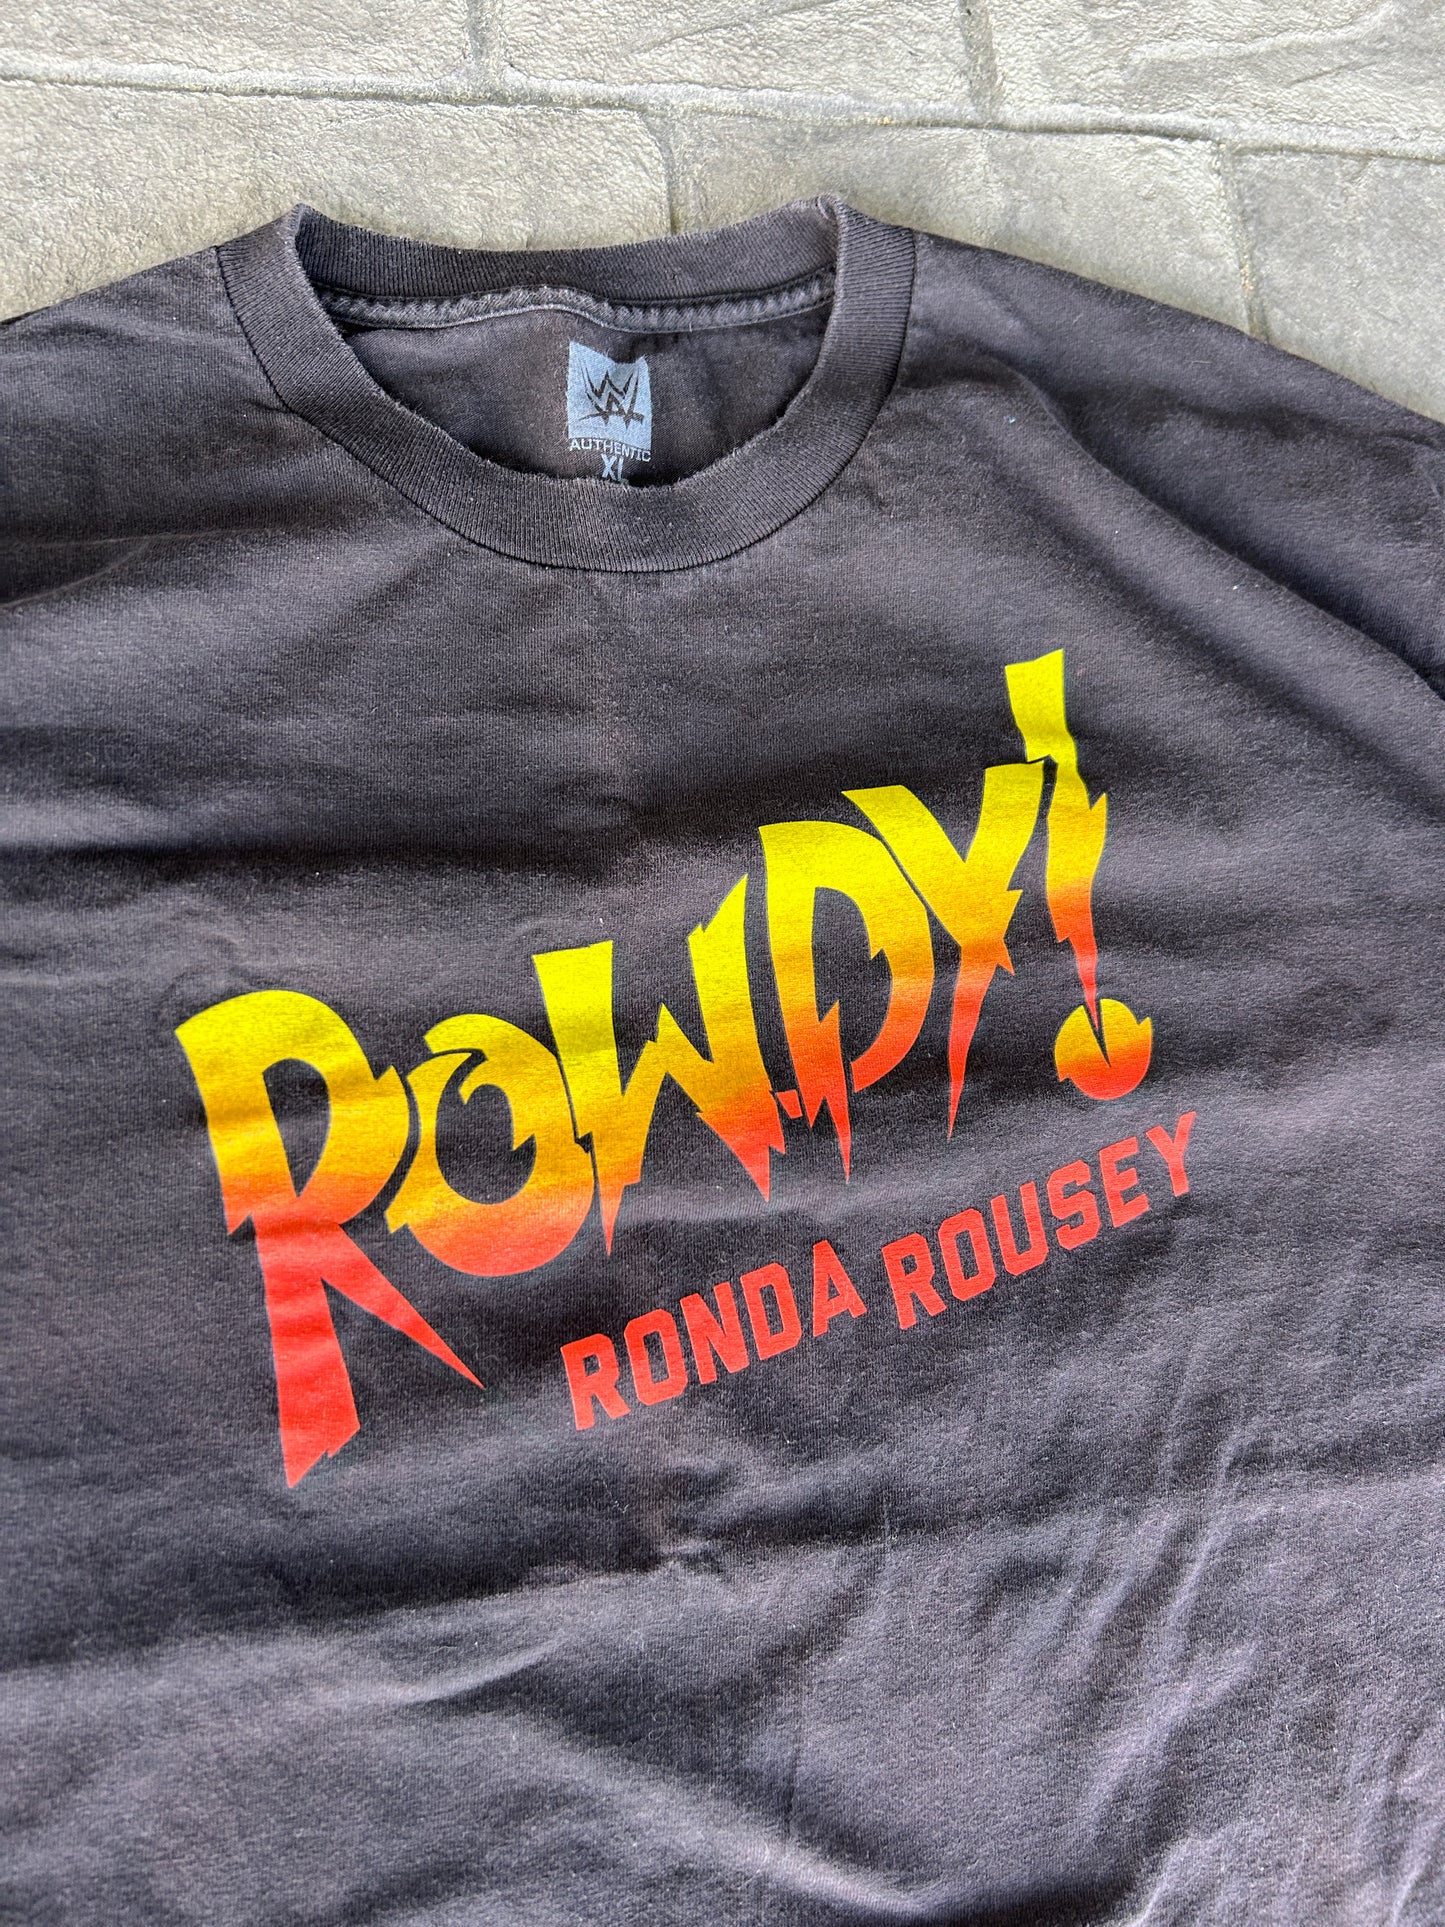 WWE Rowdy Ronda Rousey Tee (XL)